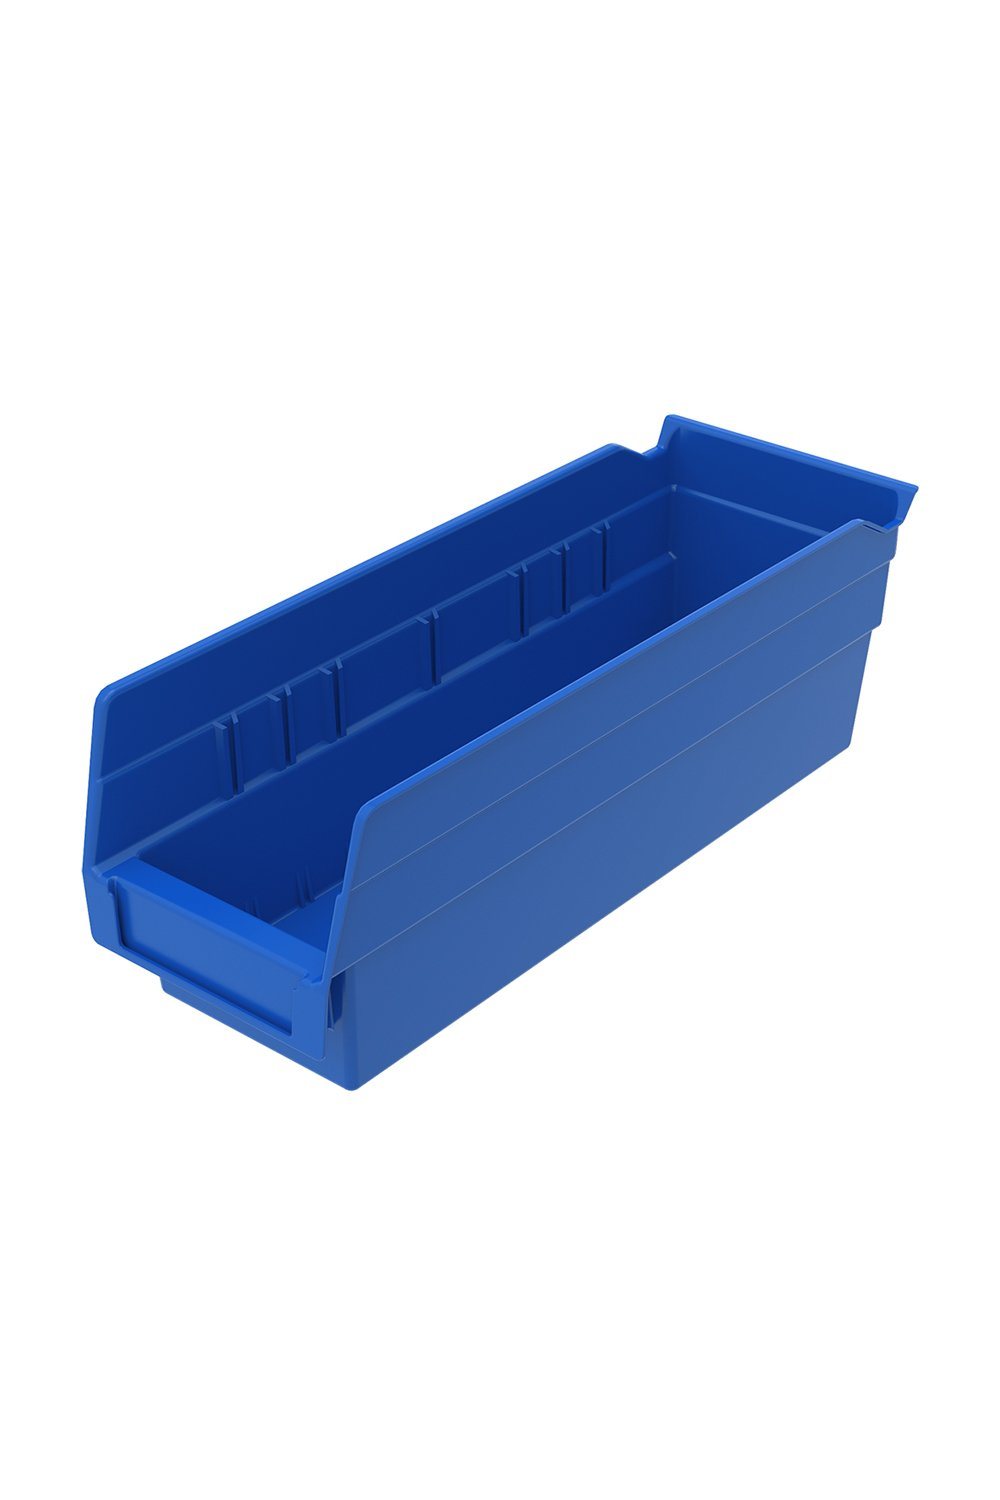 Shelf Bin for 12"D Shelves Bins & Containers Acart 11-5/8'' x 4-1/8'' x 4'' Blue 